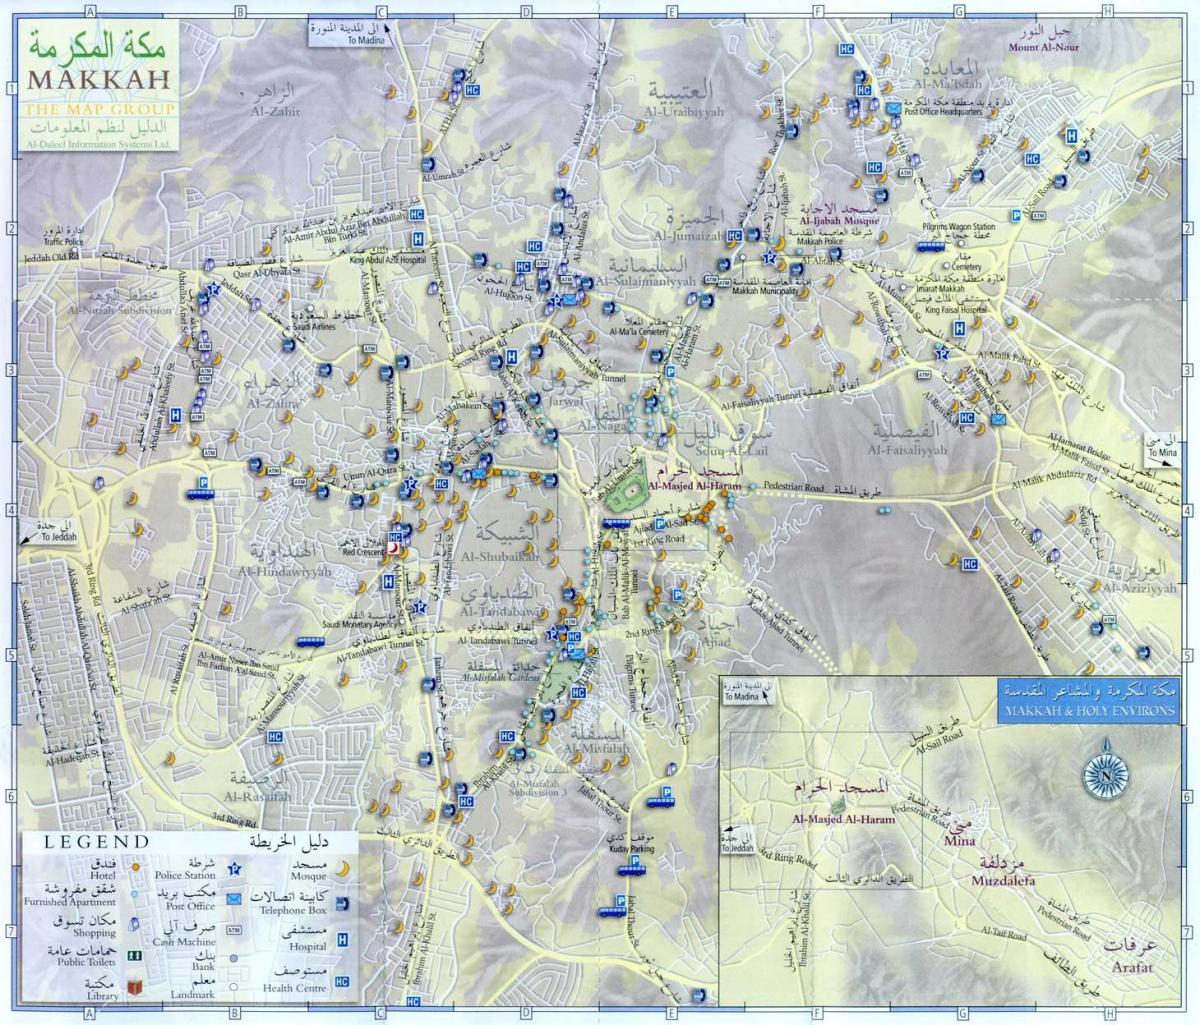 Mecca (Makkah) city map